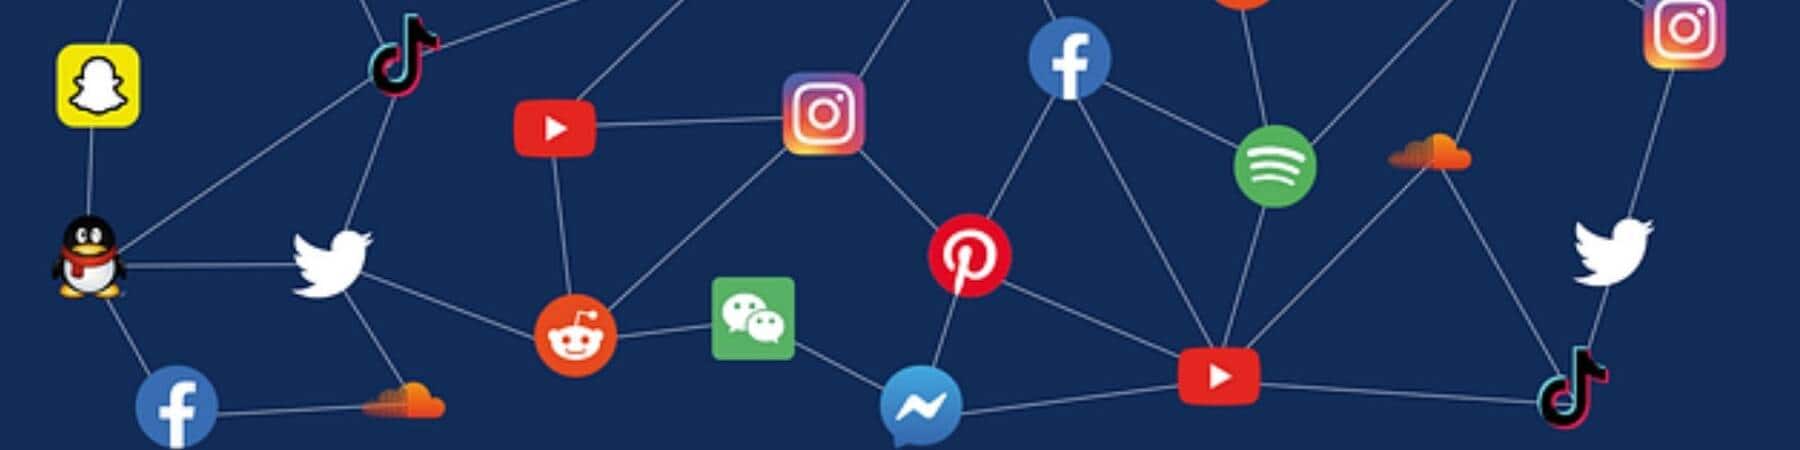 Social Media Marketing in 7 stappen